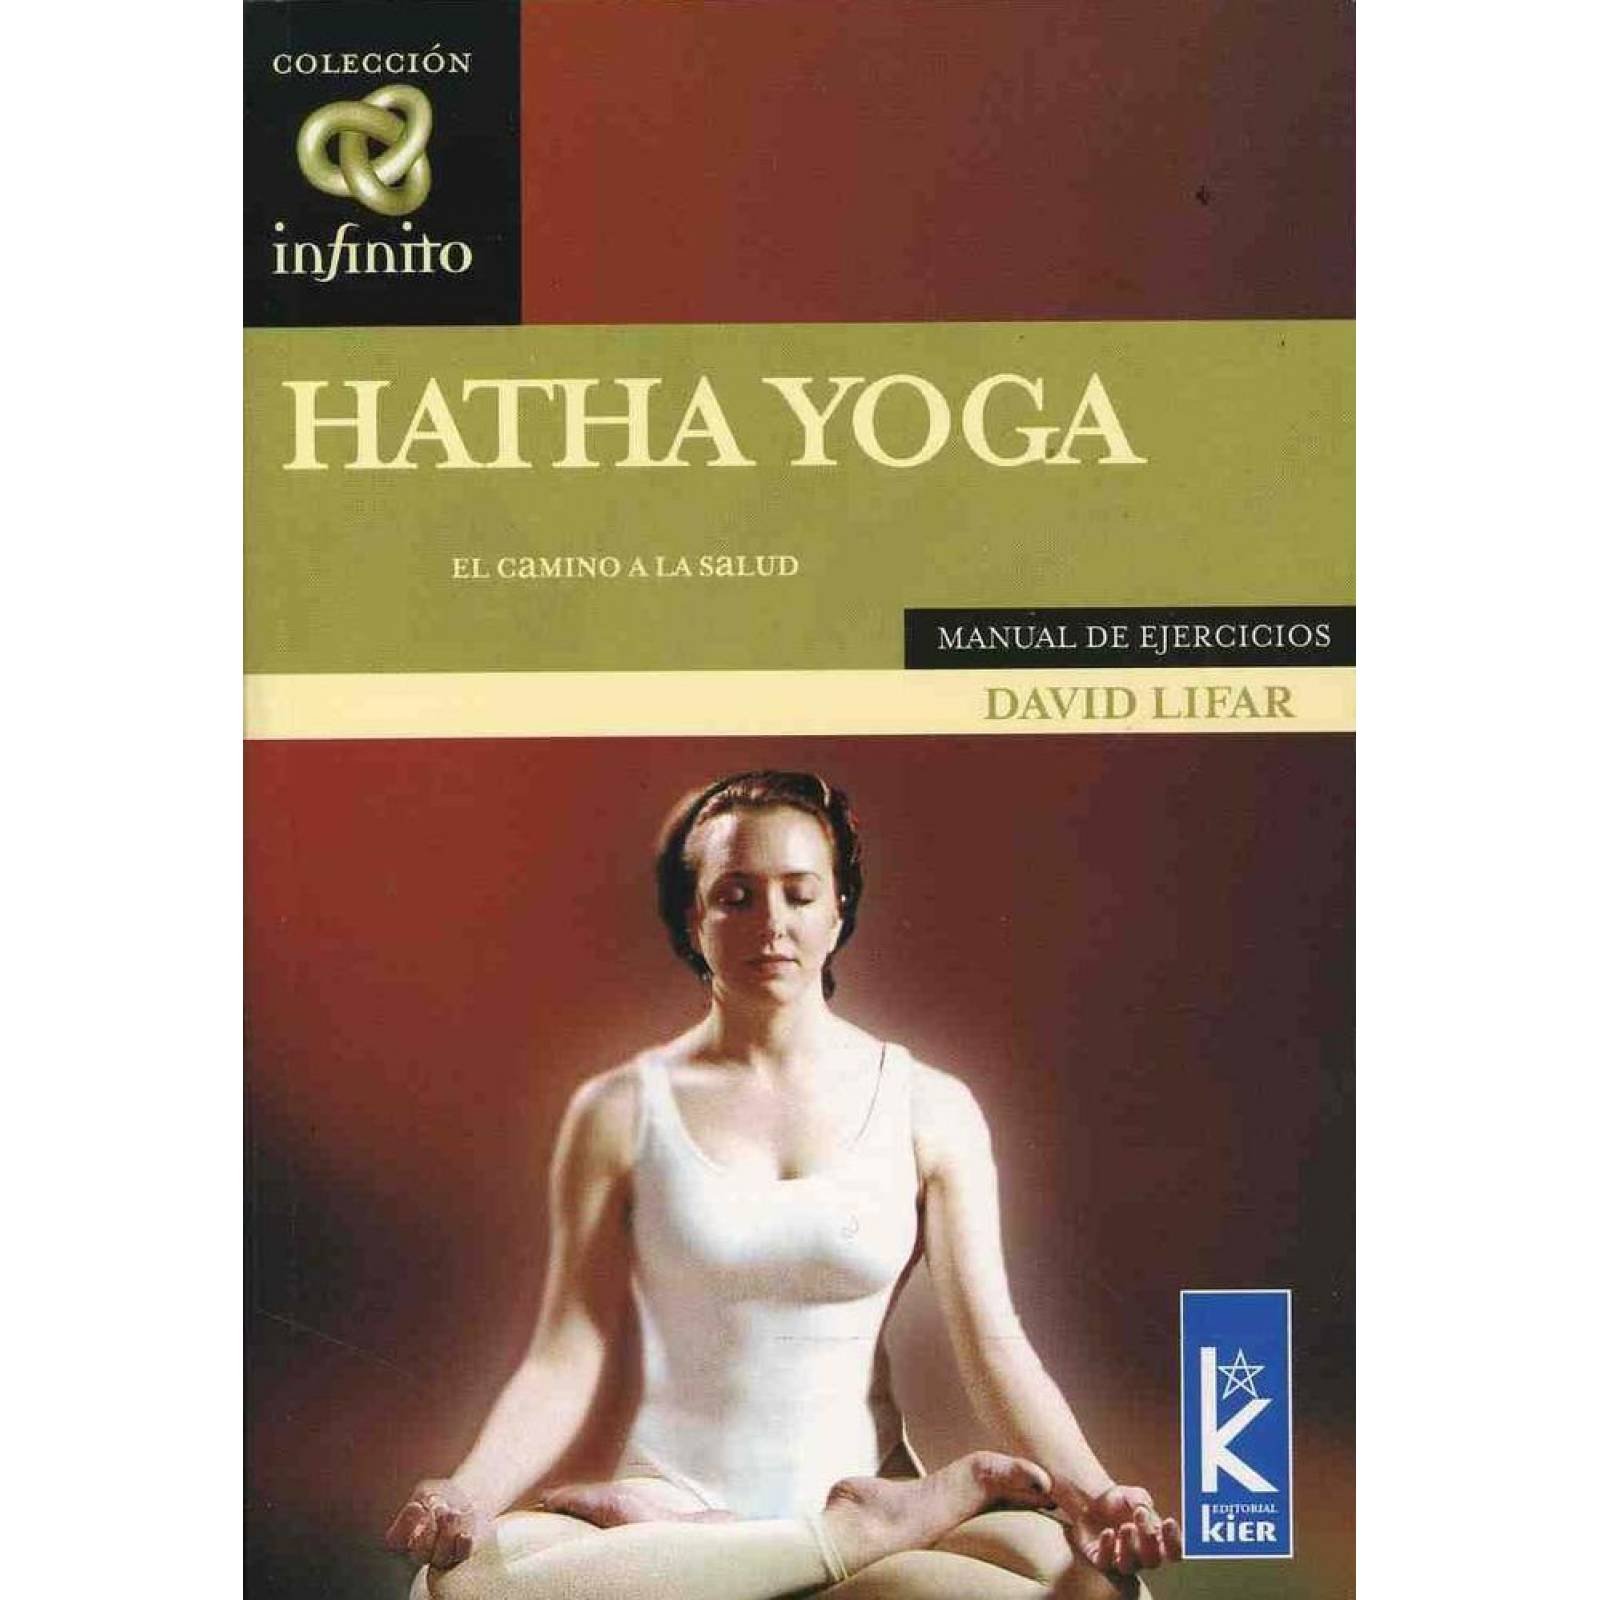 Hatha yoga 